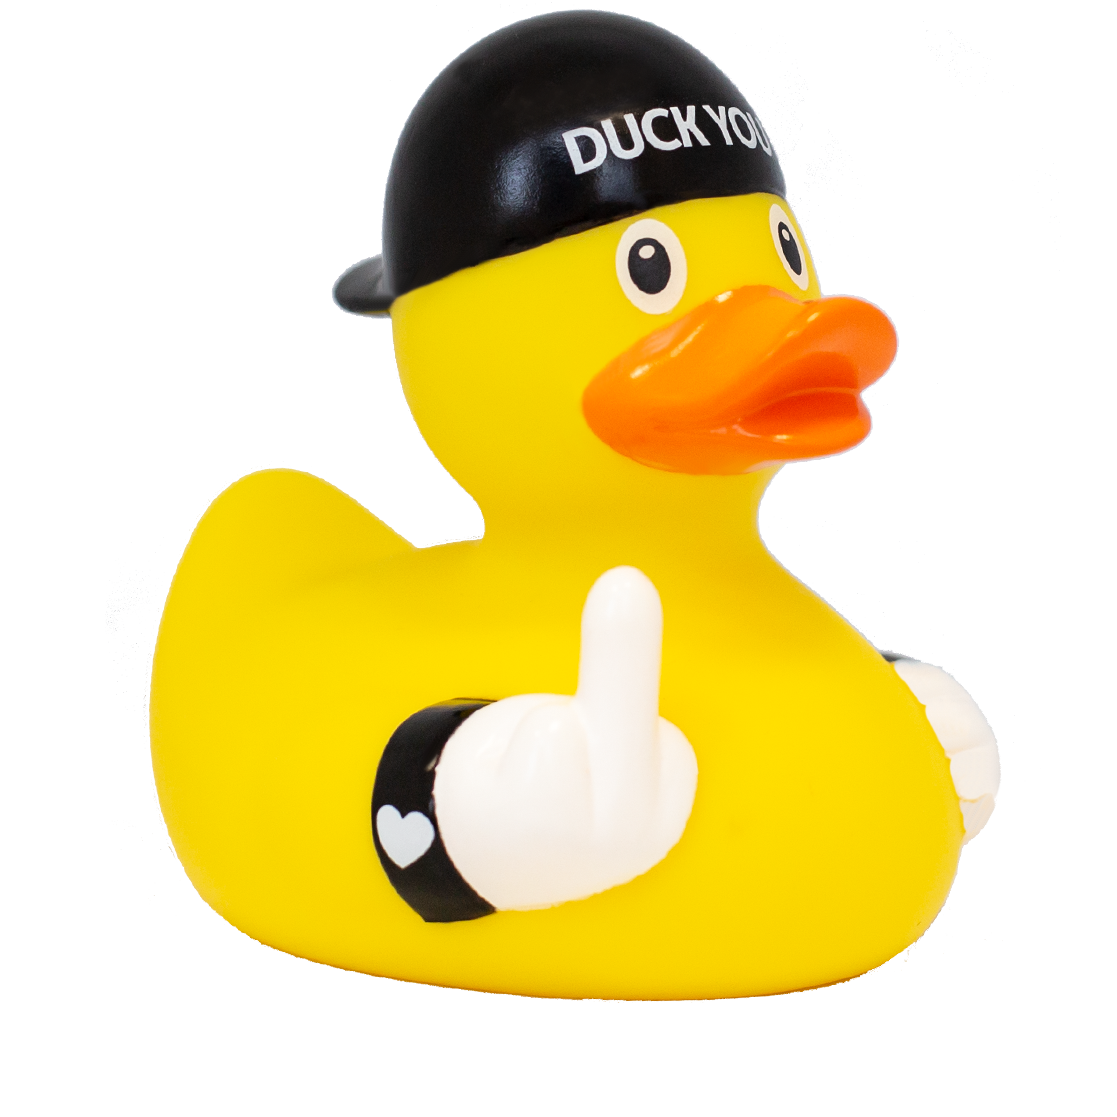 https://lilalu-shop.com/media/image/f2/a7/7d/lilalu-quietscheente-duck-you-rubber-duck-HR.png